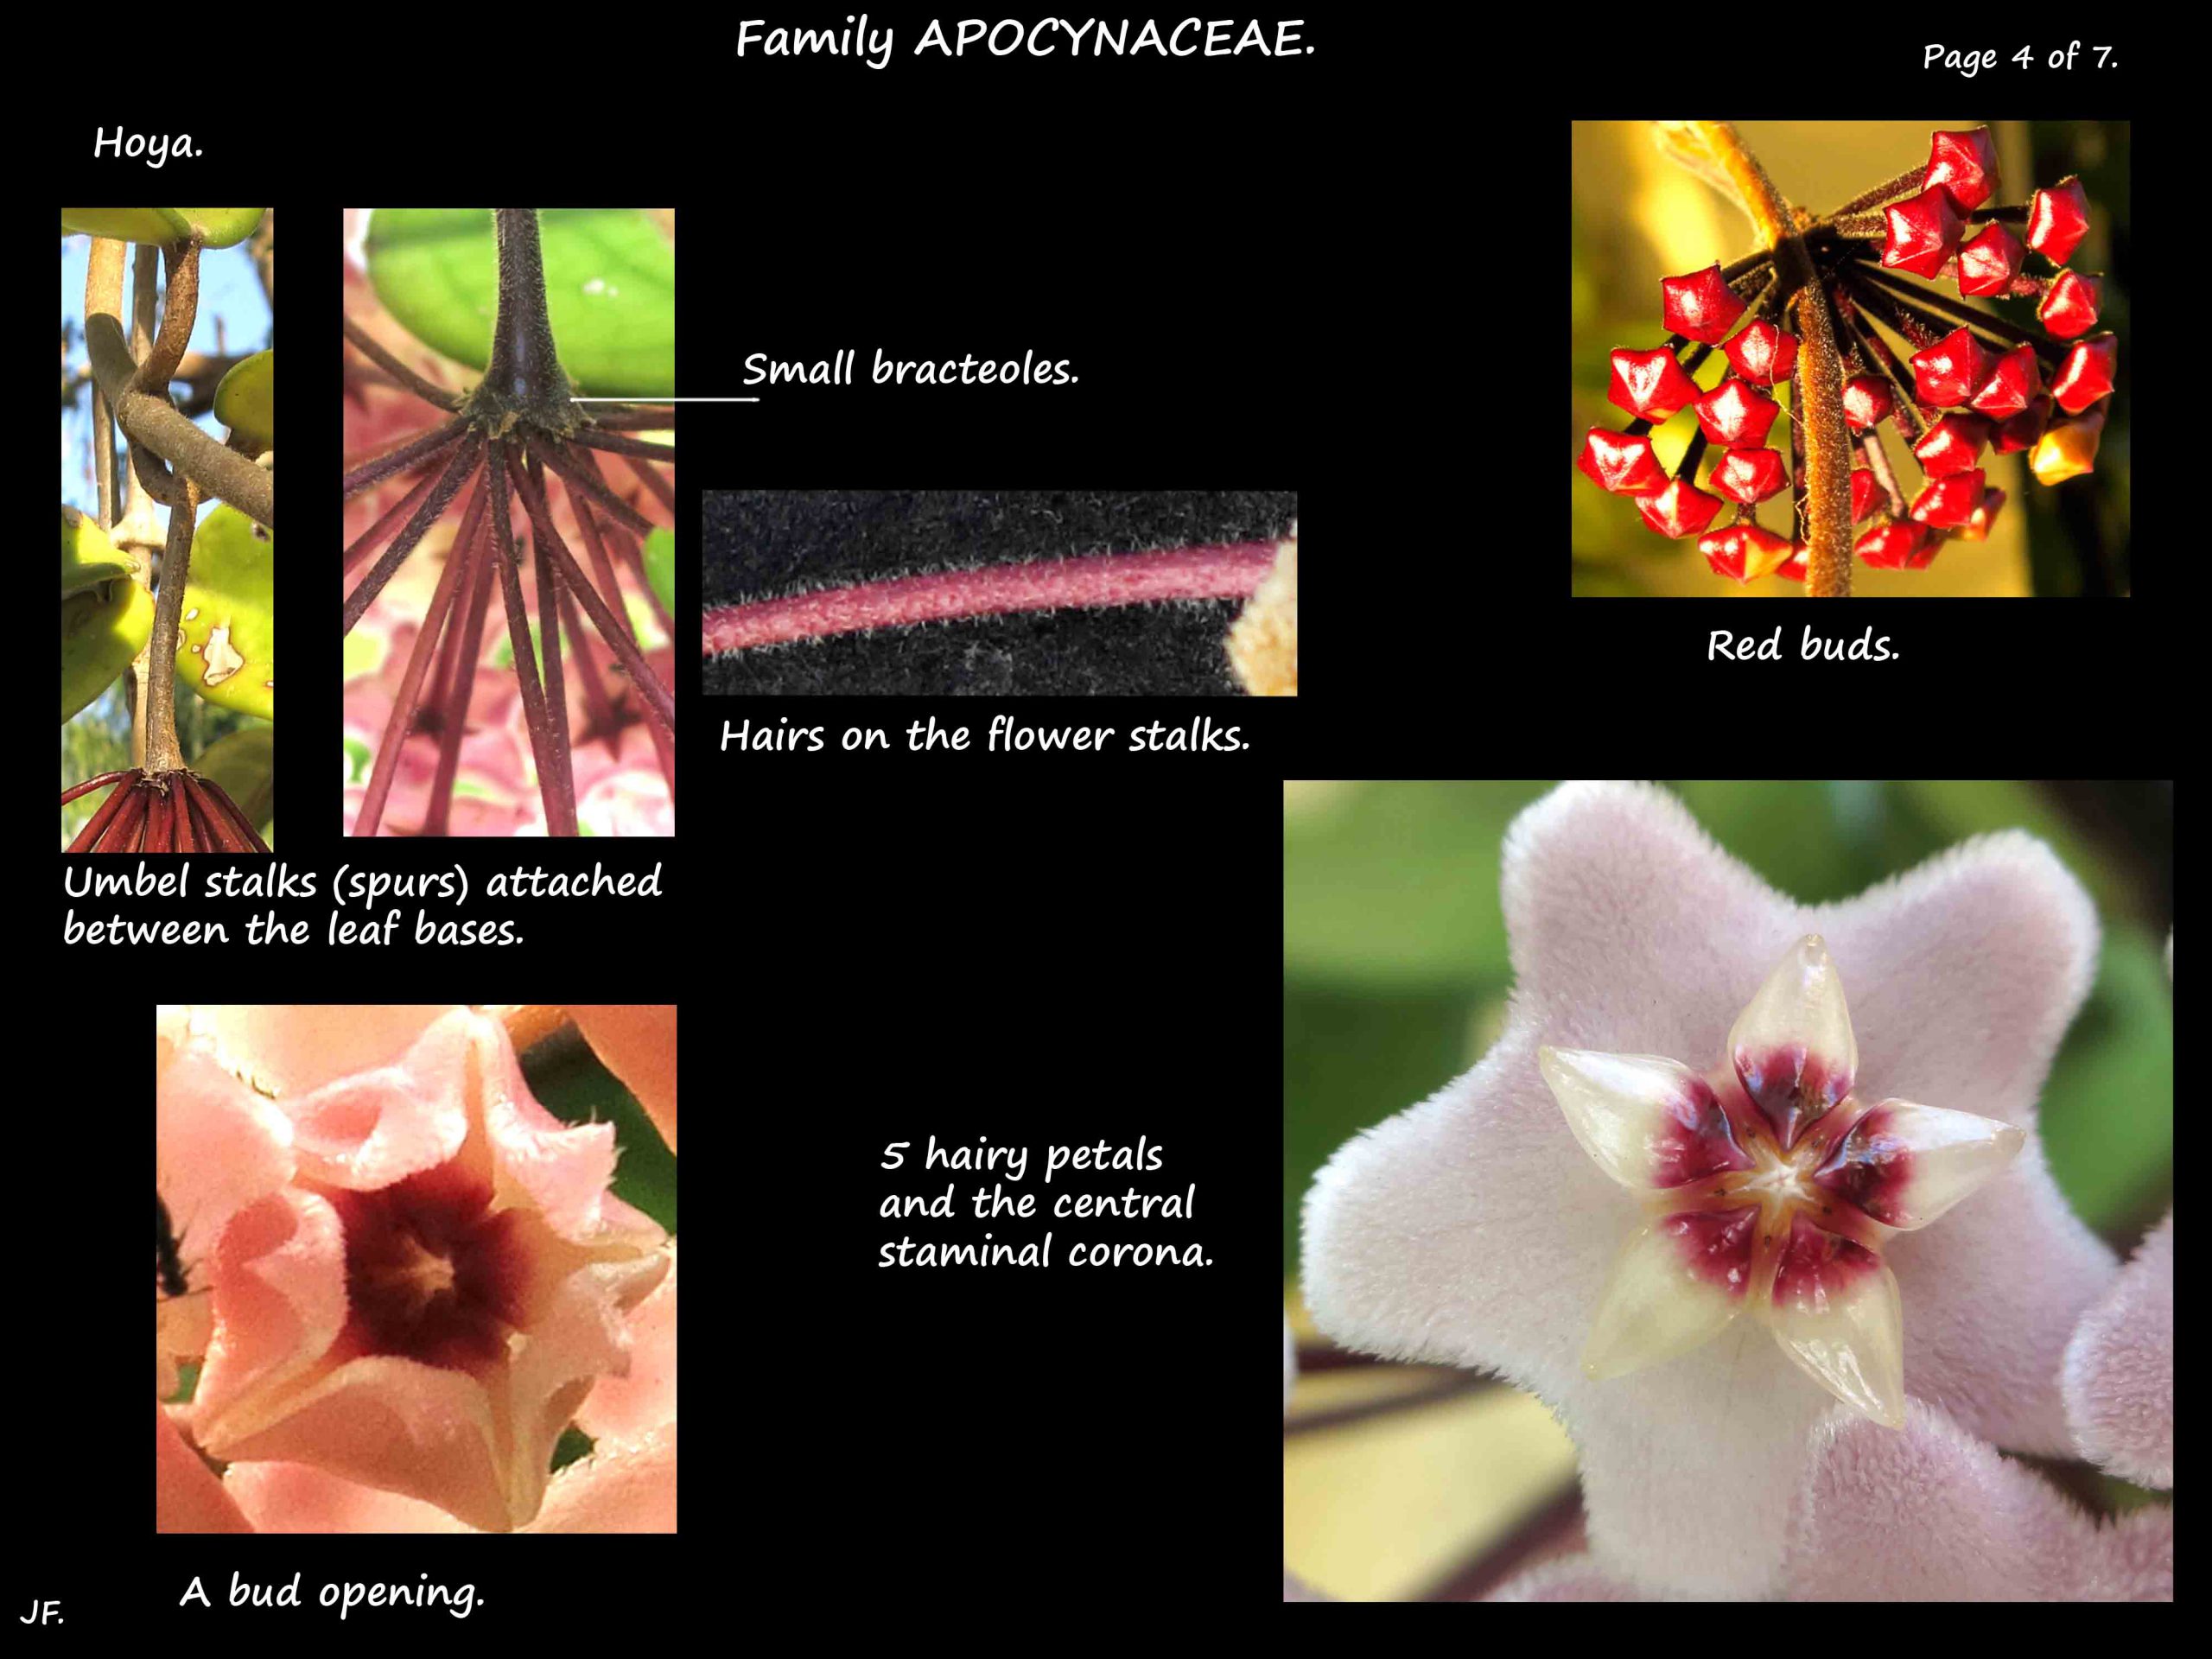 4 Hoya petals and corona